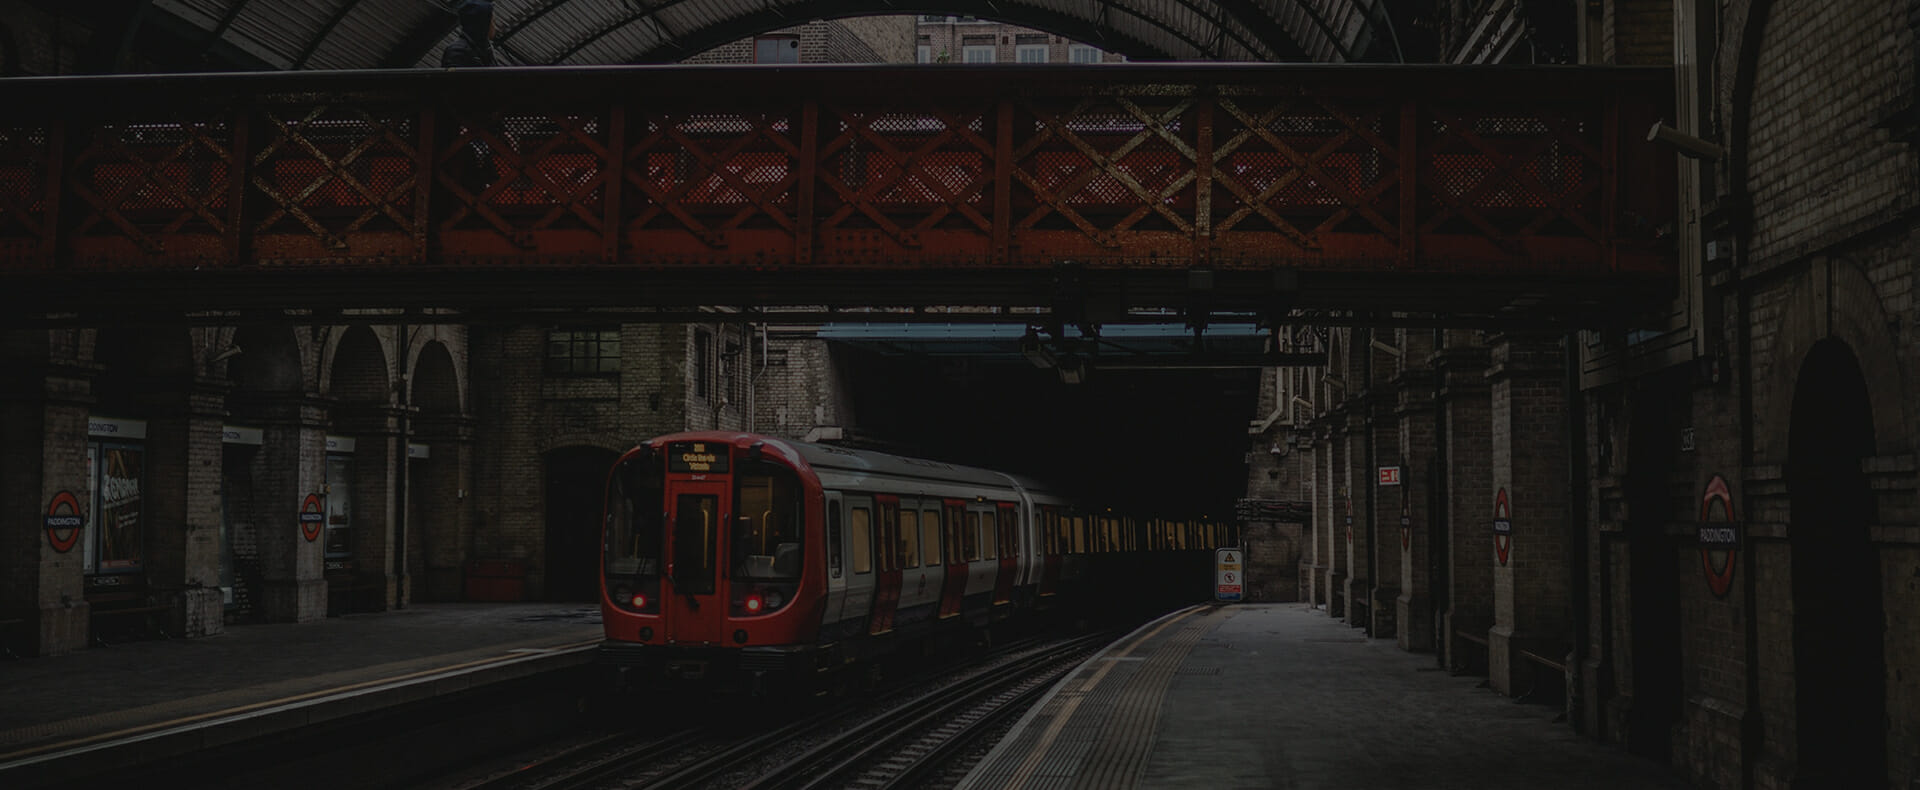 train waiting at london paddington train station platform with footbridge above